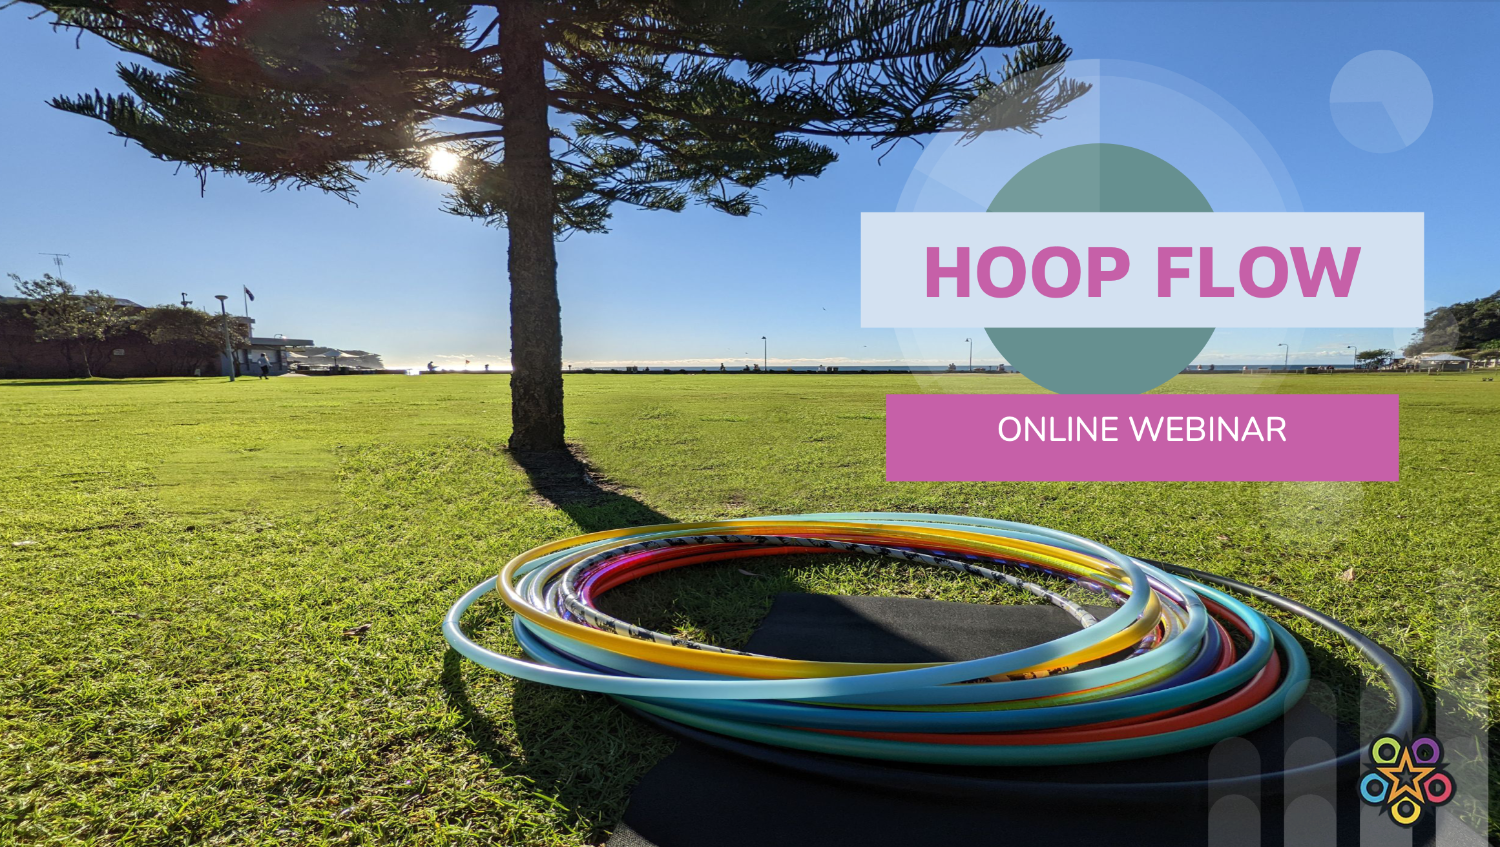 Download Hoop Flow Webinar PDF for FREE Video Lessons